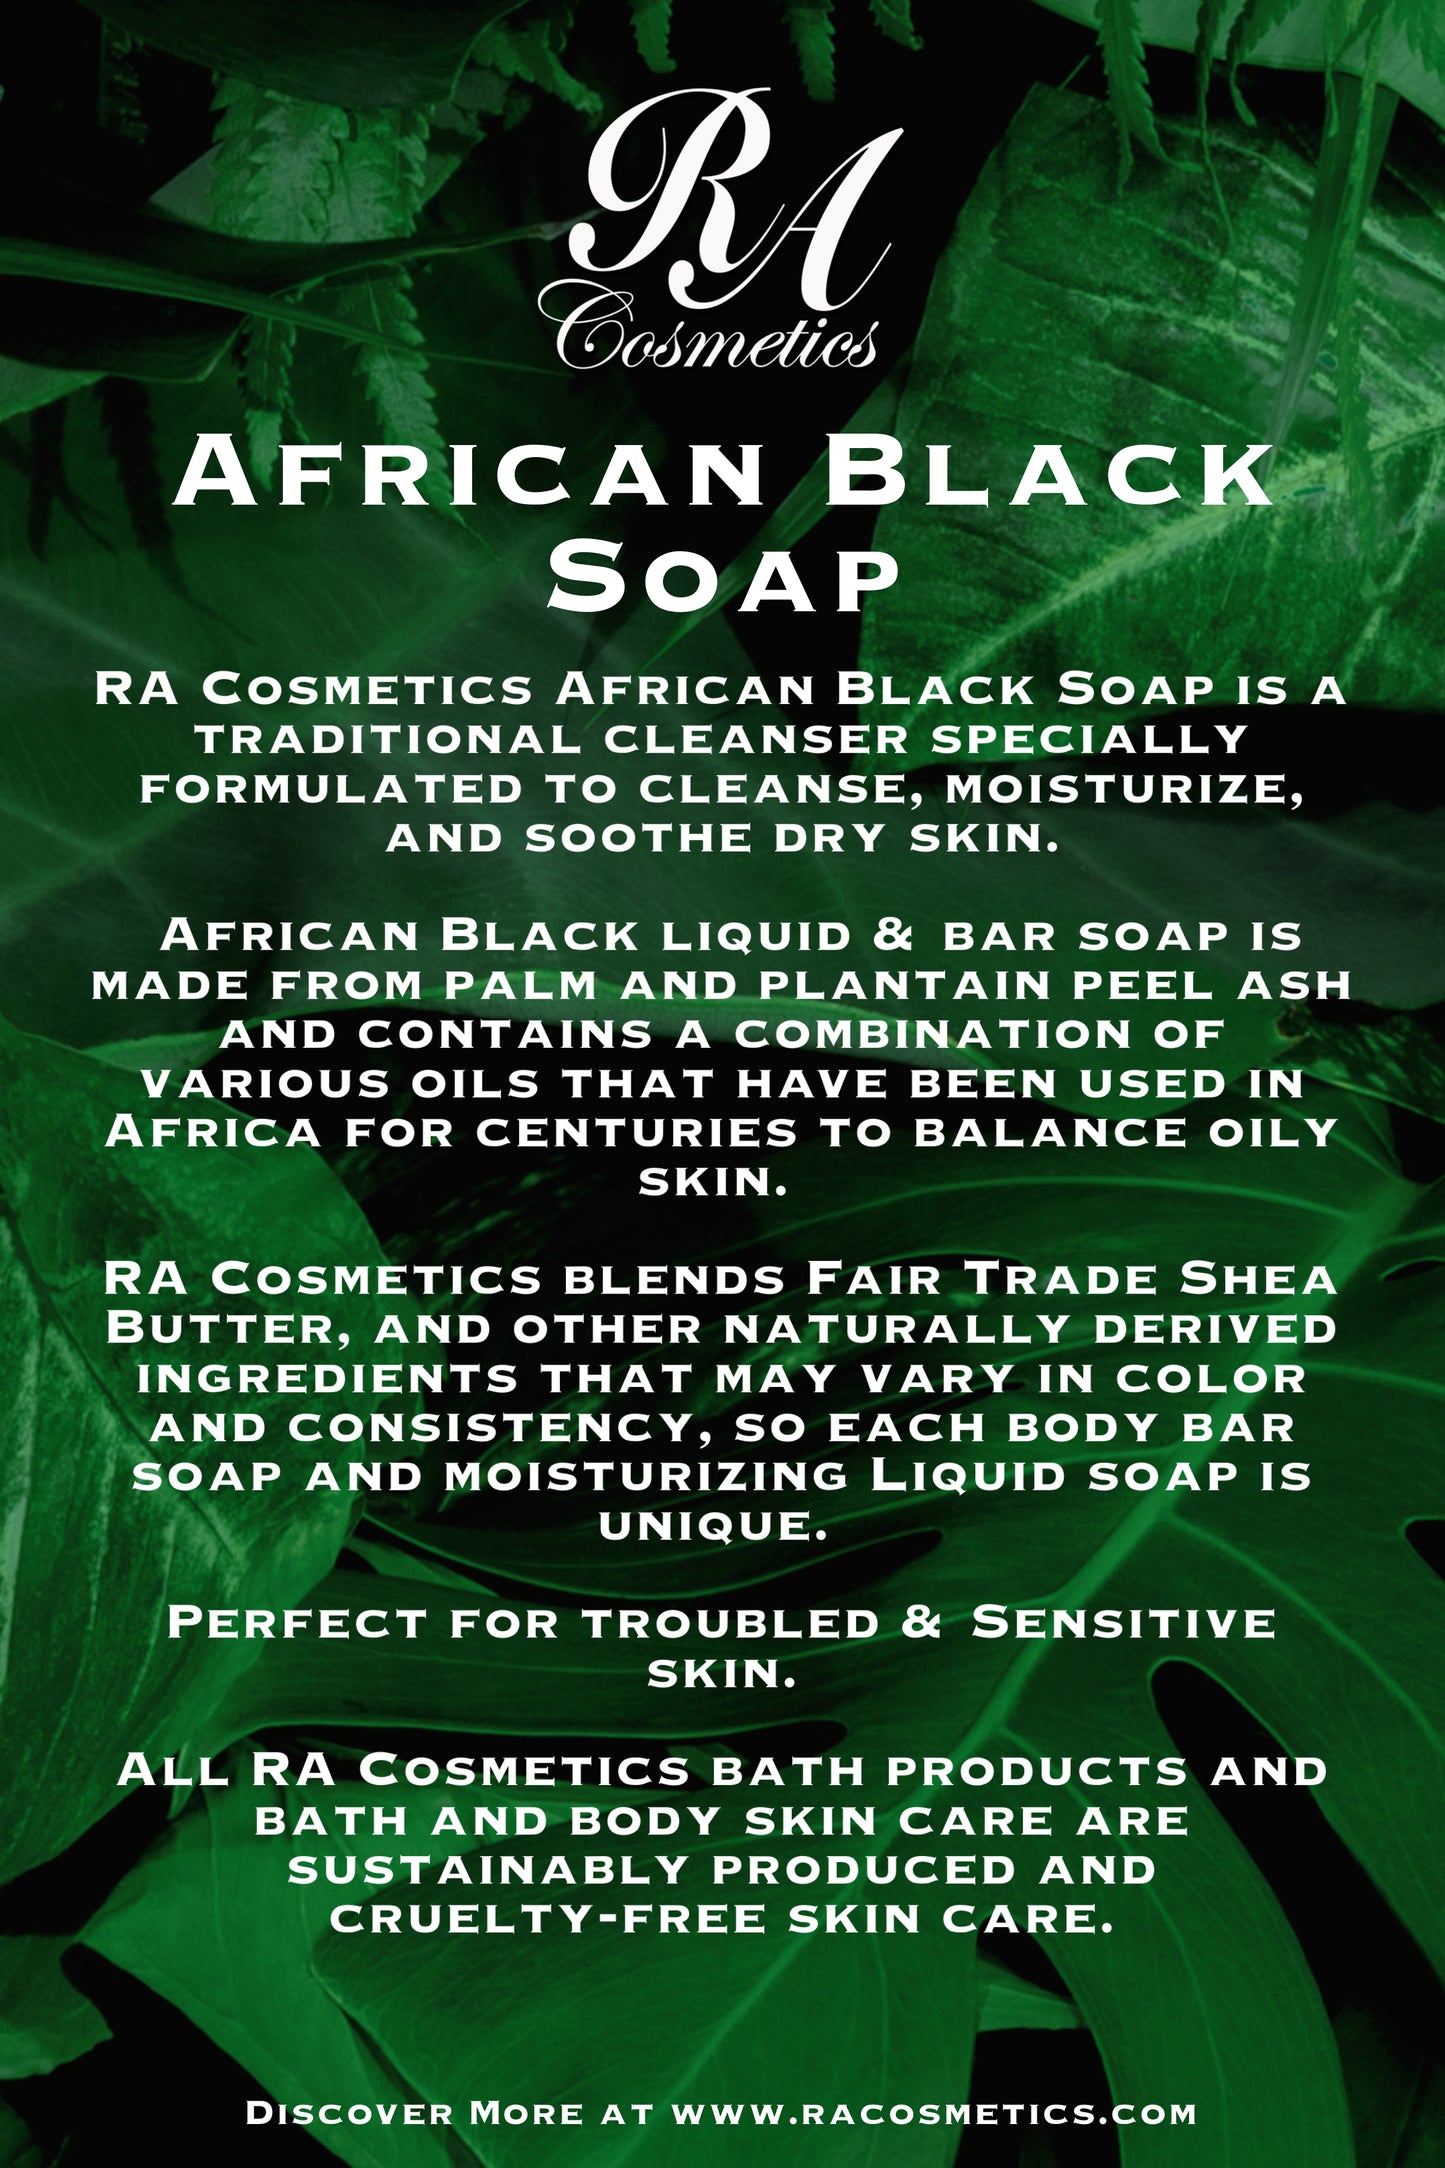 100% BLACK SOAP BAR - BLACK CASTOR OIL